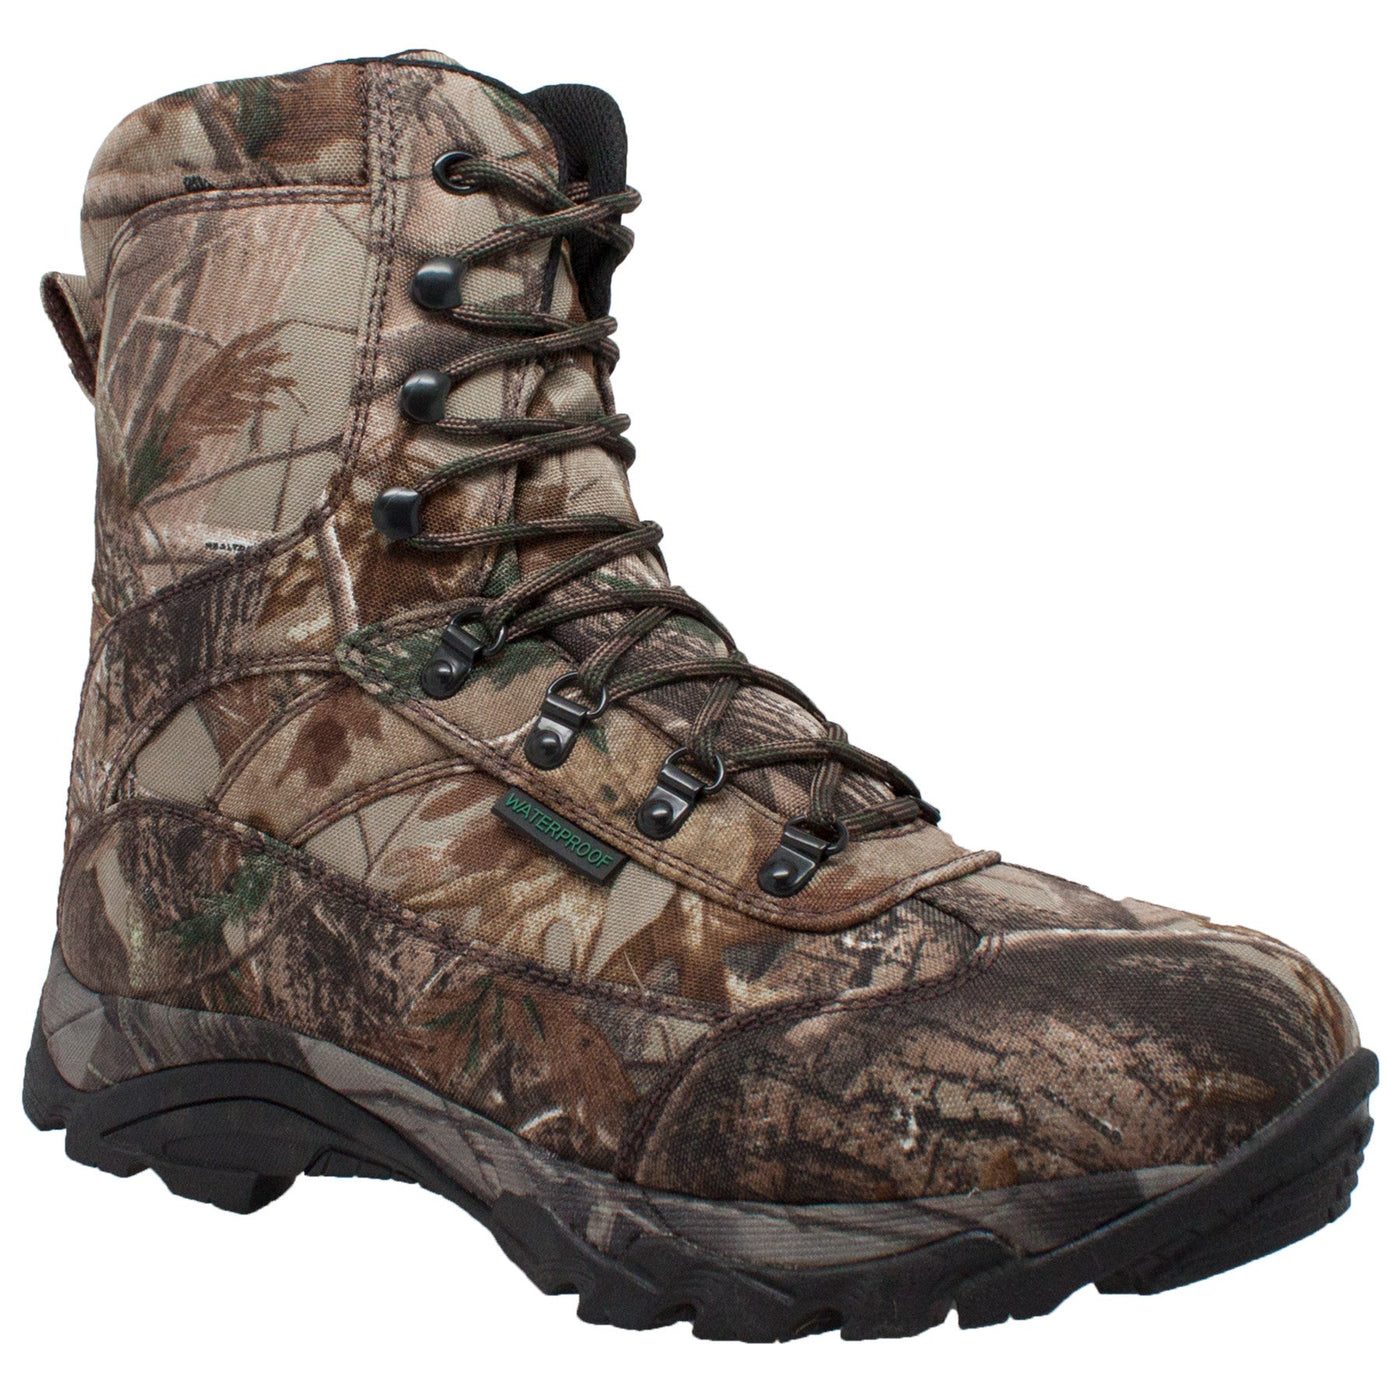 Men's 10" 400g Camo Hunting Boot - 1014 - Shop Genuine Leather men & women's boots online | AdTecFootWear